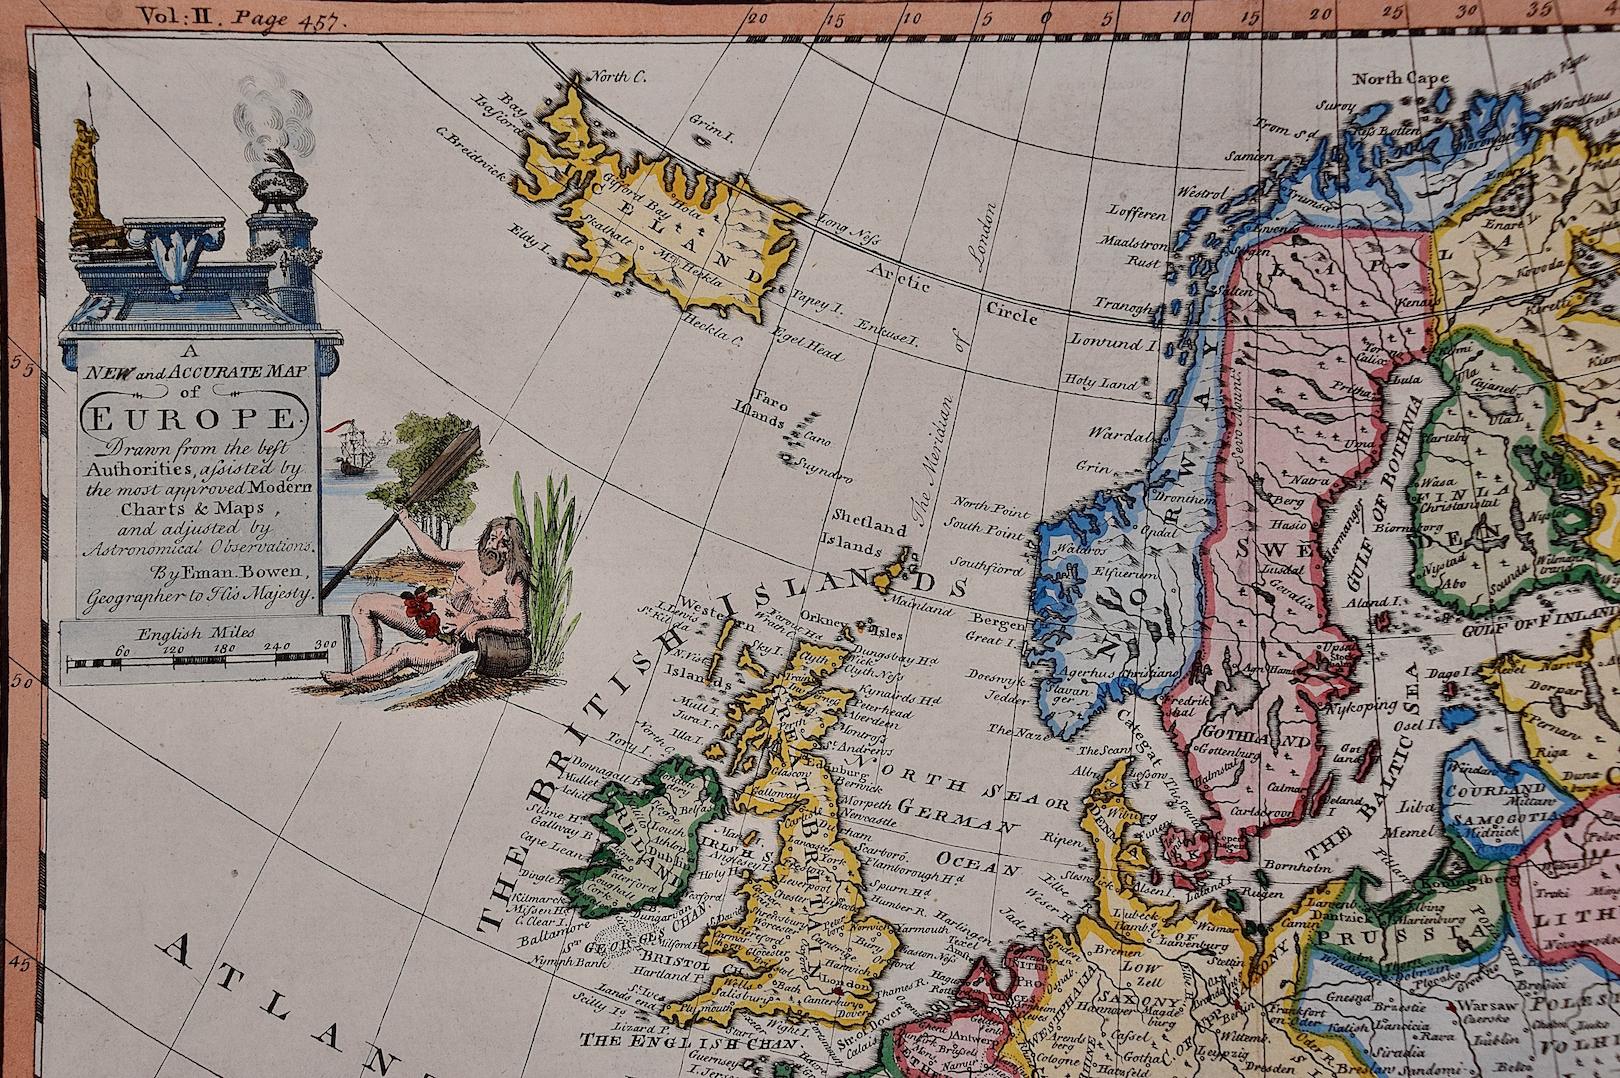 Europe: An Original 18th Century Hand-colored Map by E. Bowen - Print by Emanuel Bowen